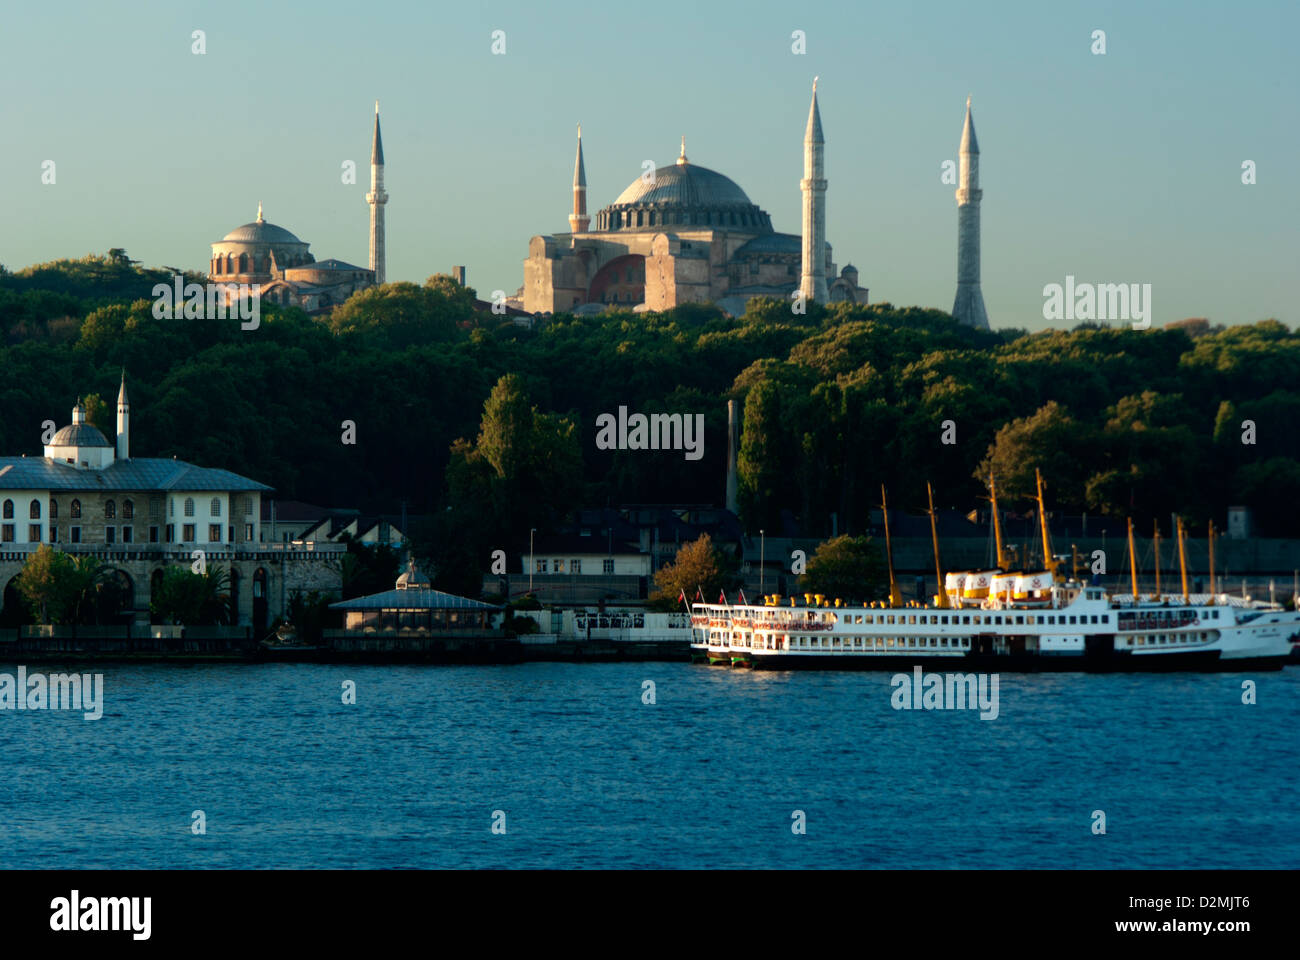 St. Sophia, Hagia Sophia, Mosque, now museum as seen from cruise ship across Galata Bridge, Istanbul, Turkey Stock Photo